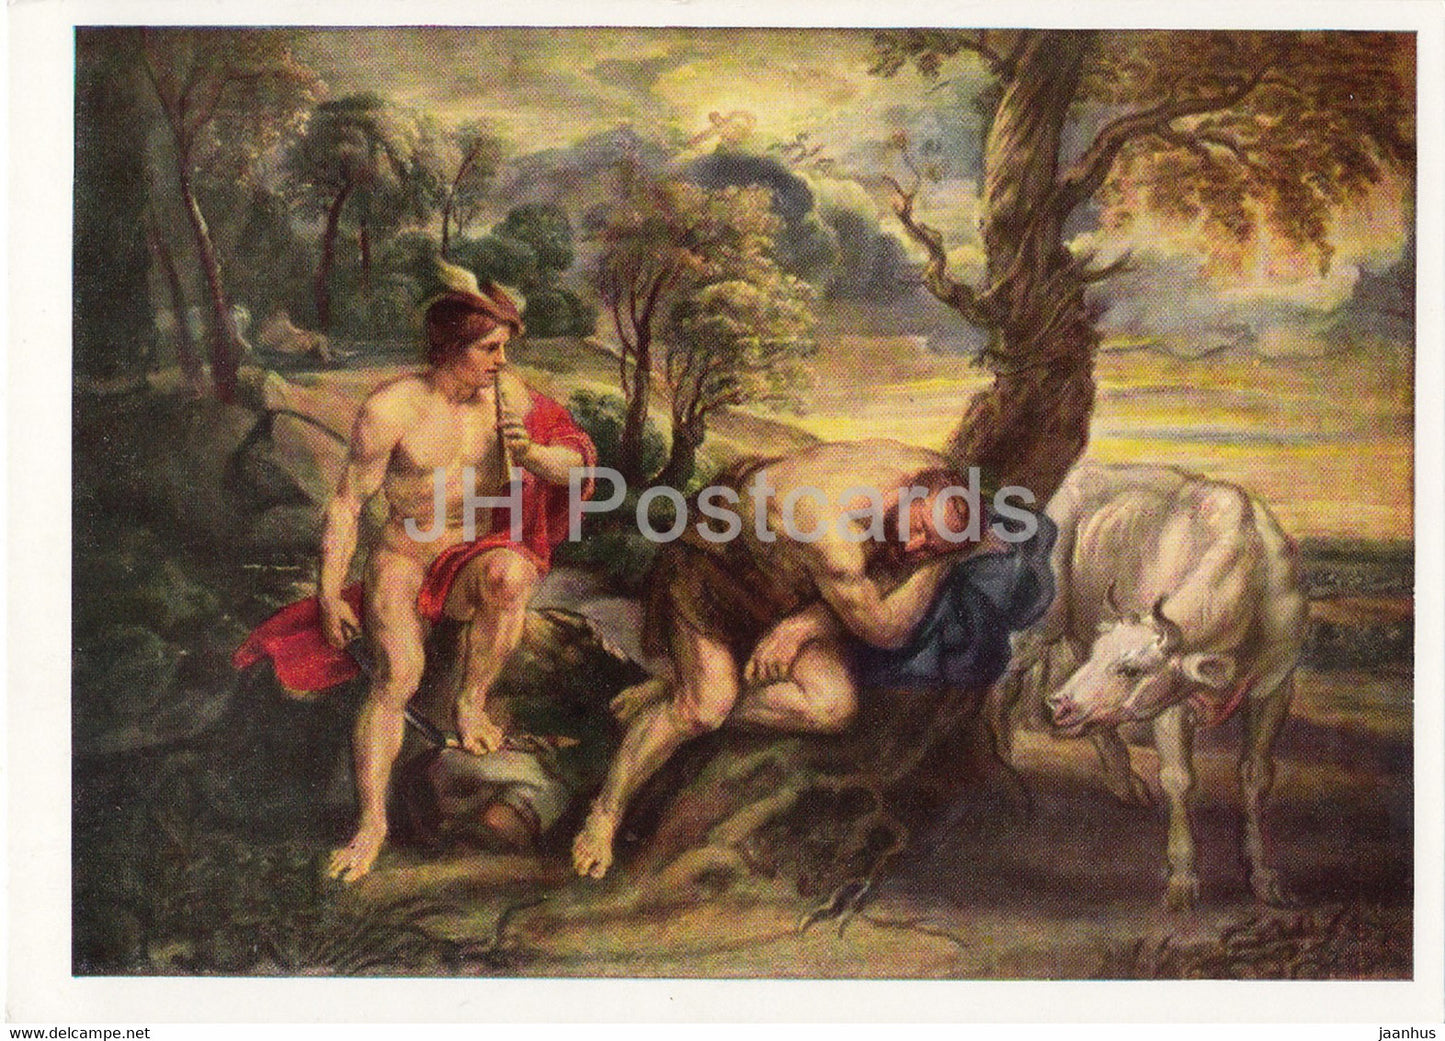 painting by Peter Paul Rubens - Merkur und Argus - Mercury and Argus - cow - Flemish art - Germany DDR - unused - JH Postcards